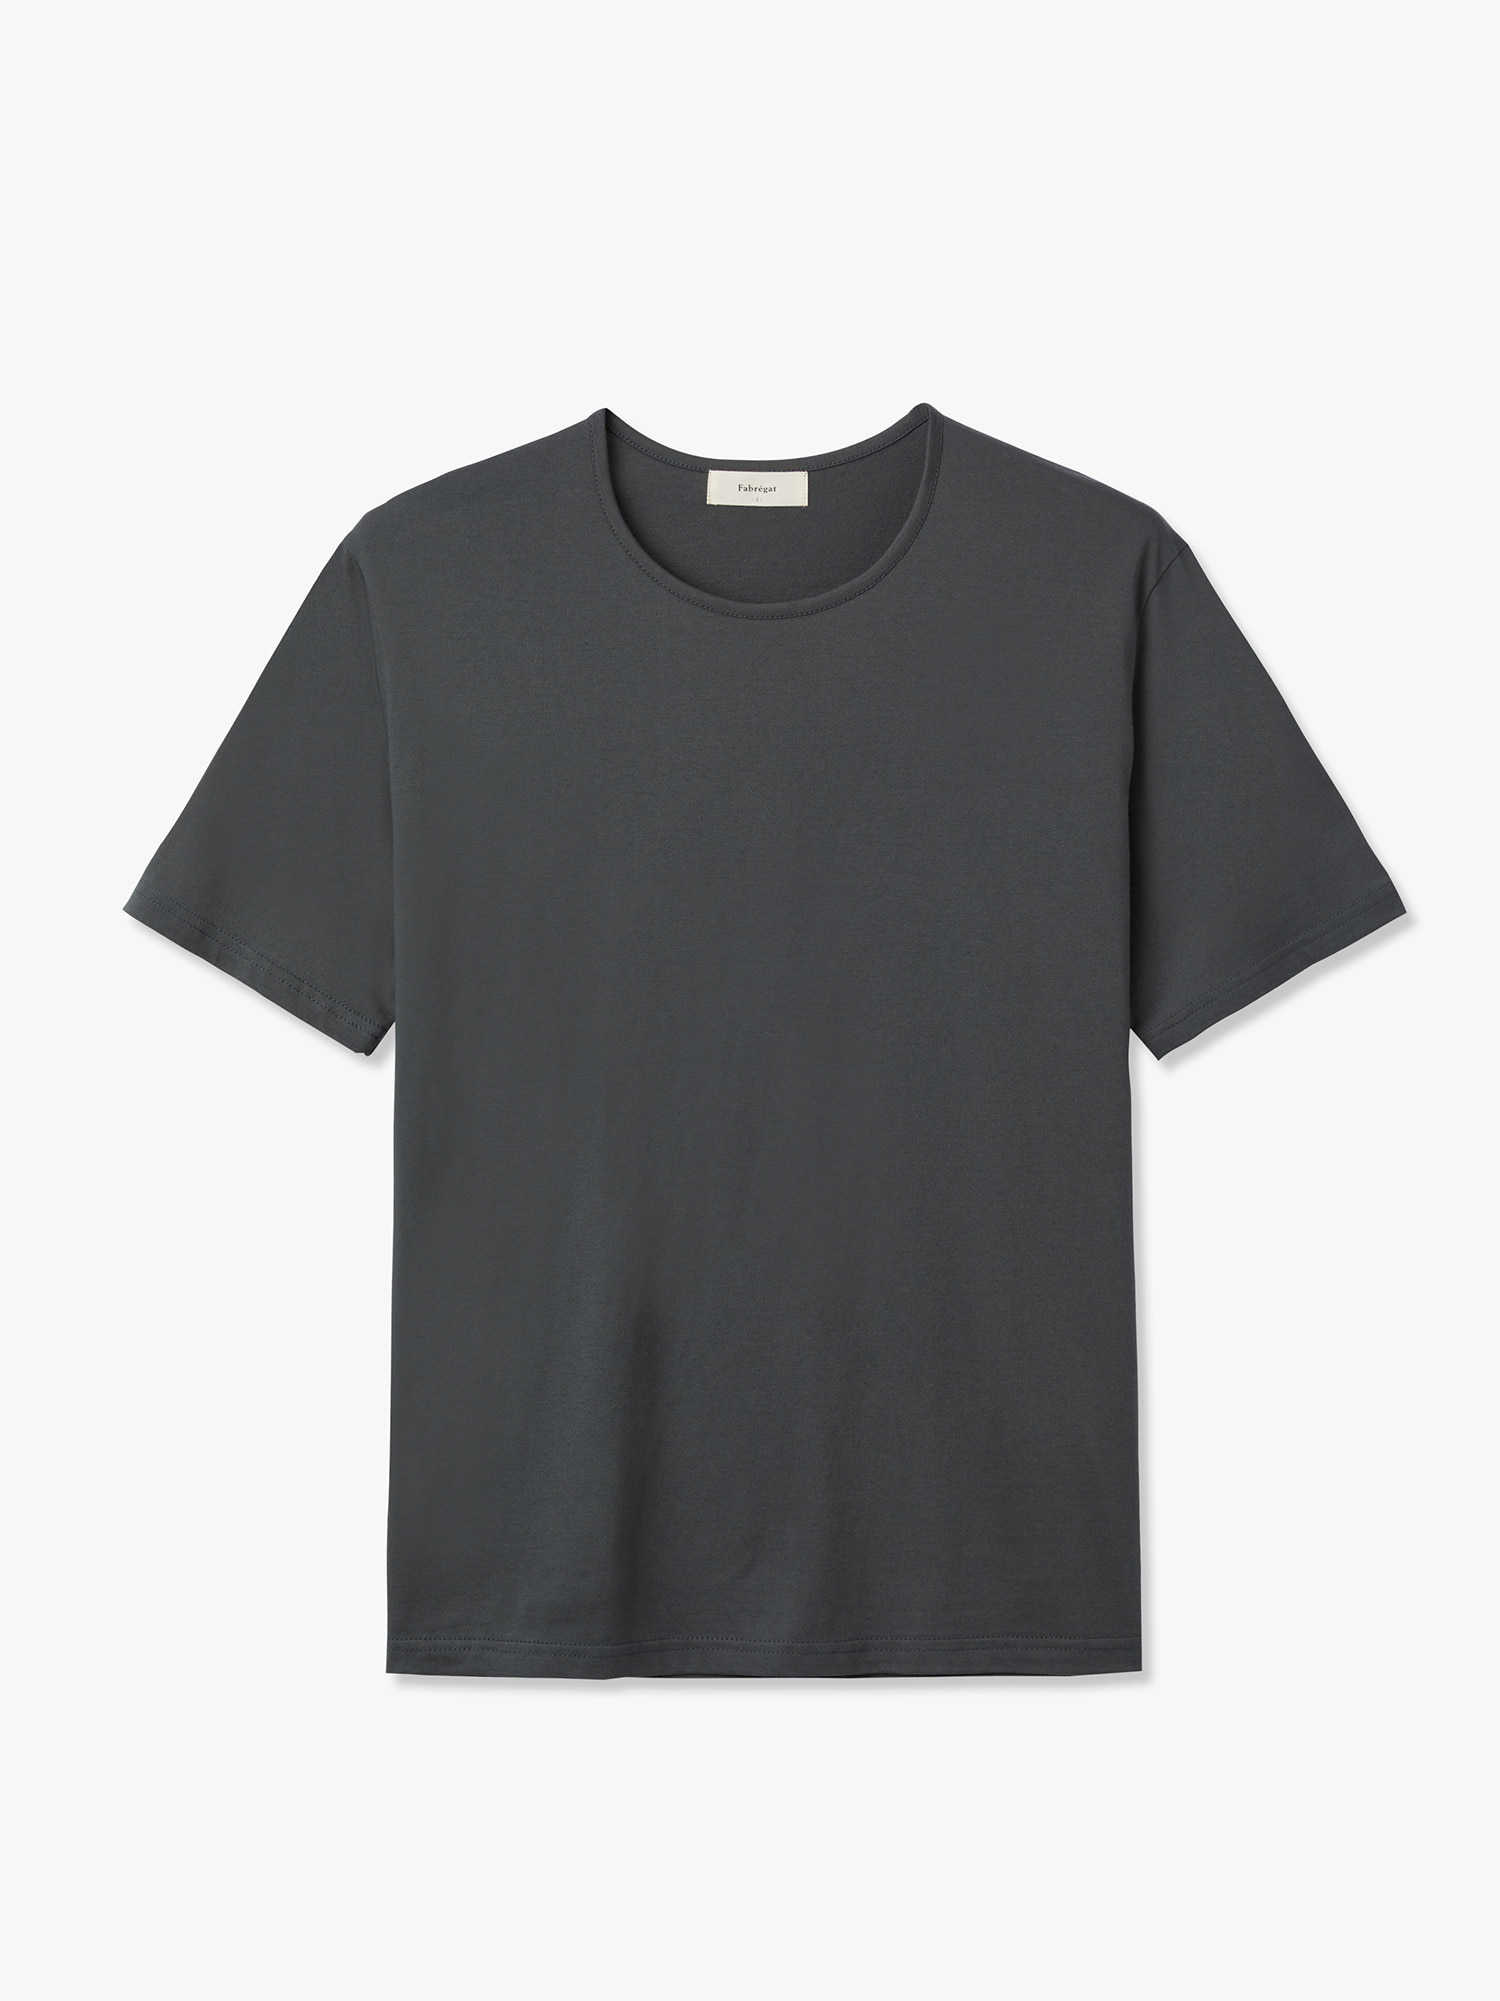 U-Neck Sapphire Silket T-Shirts (Chacoal)